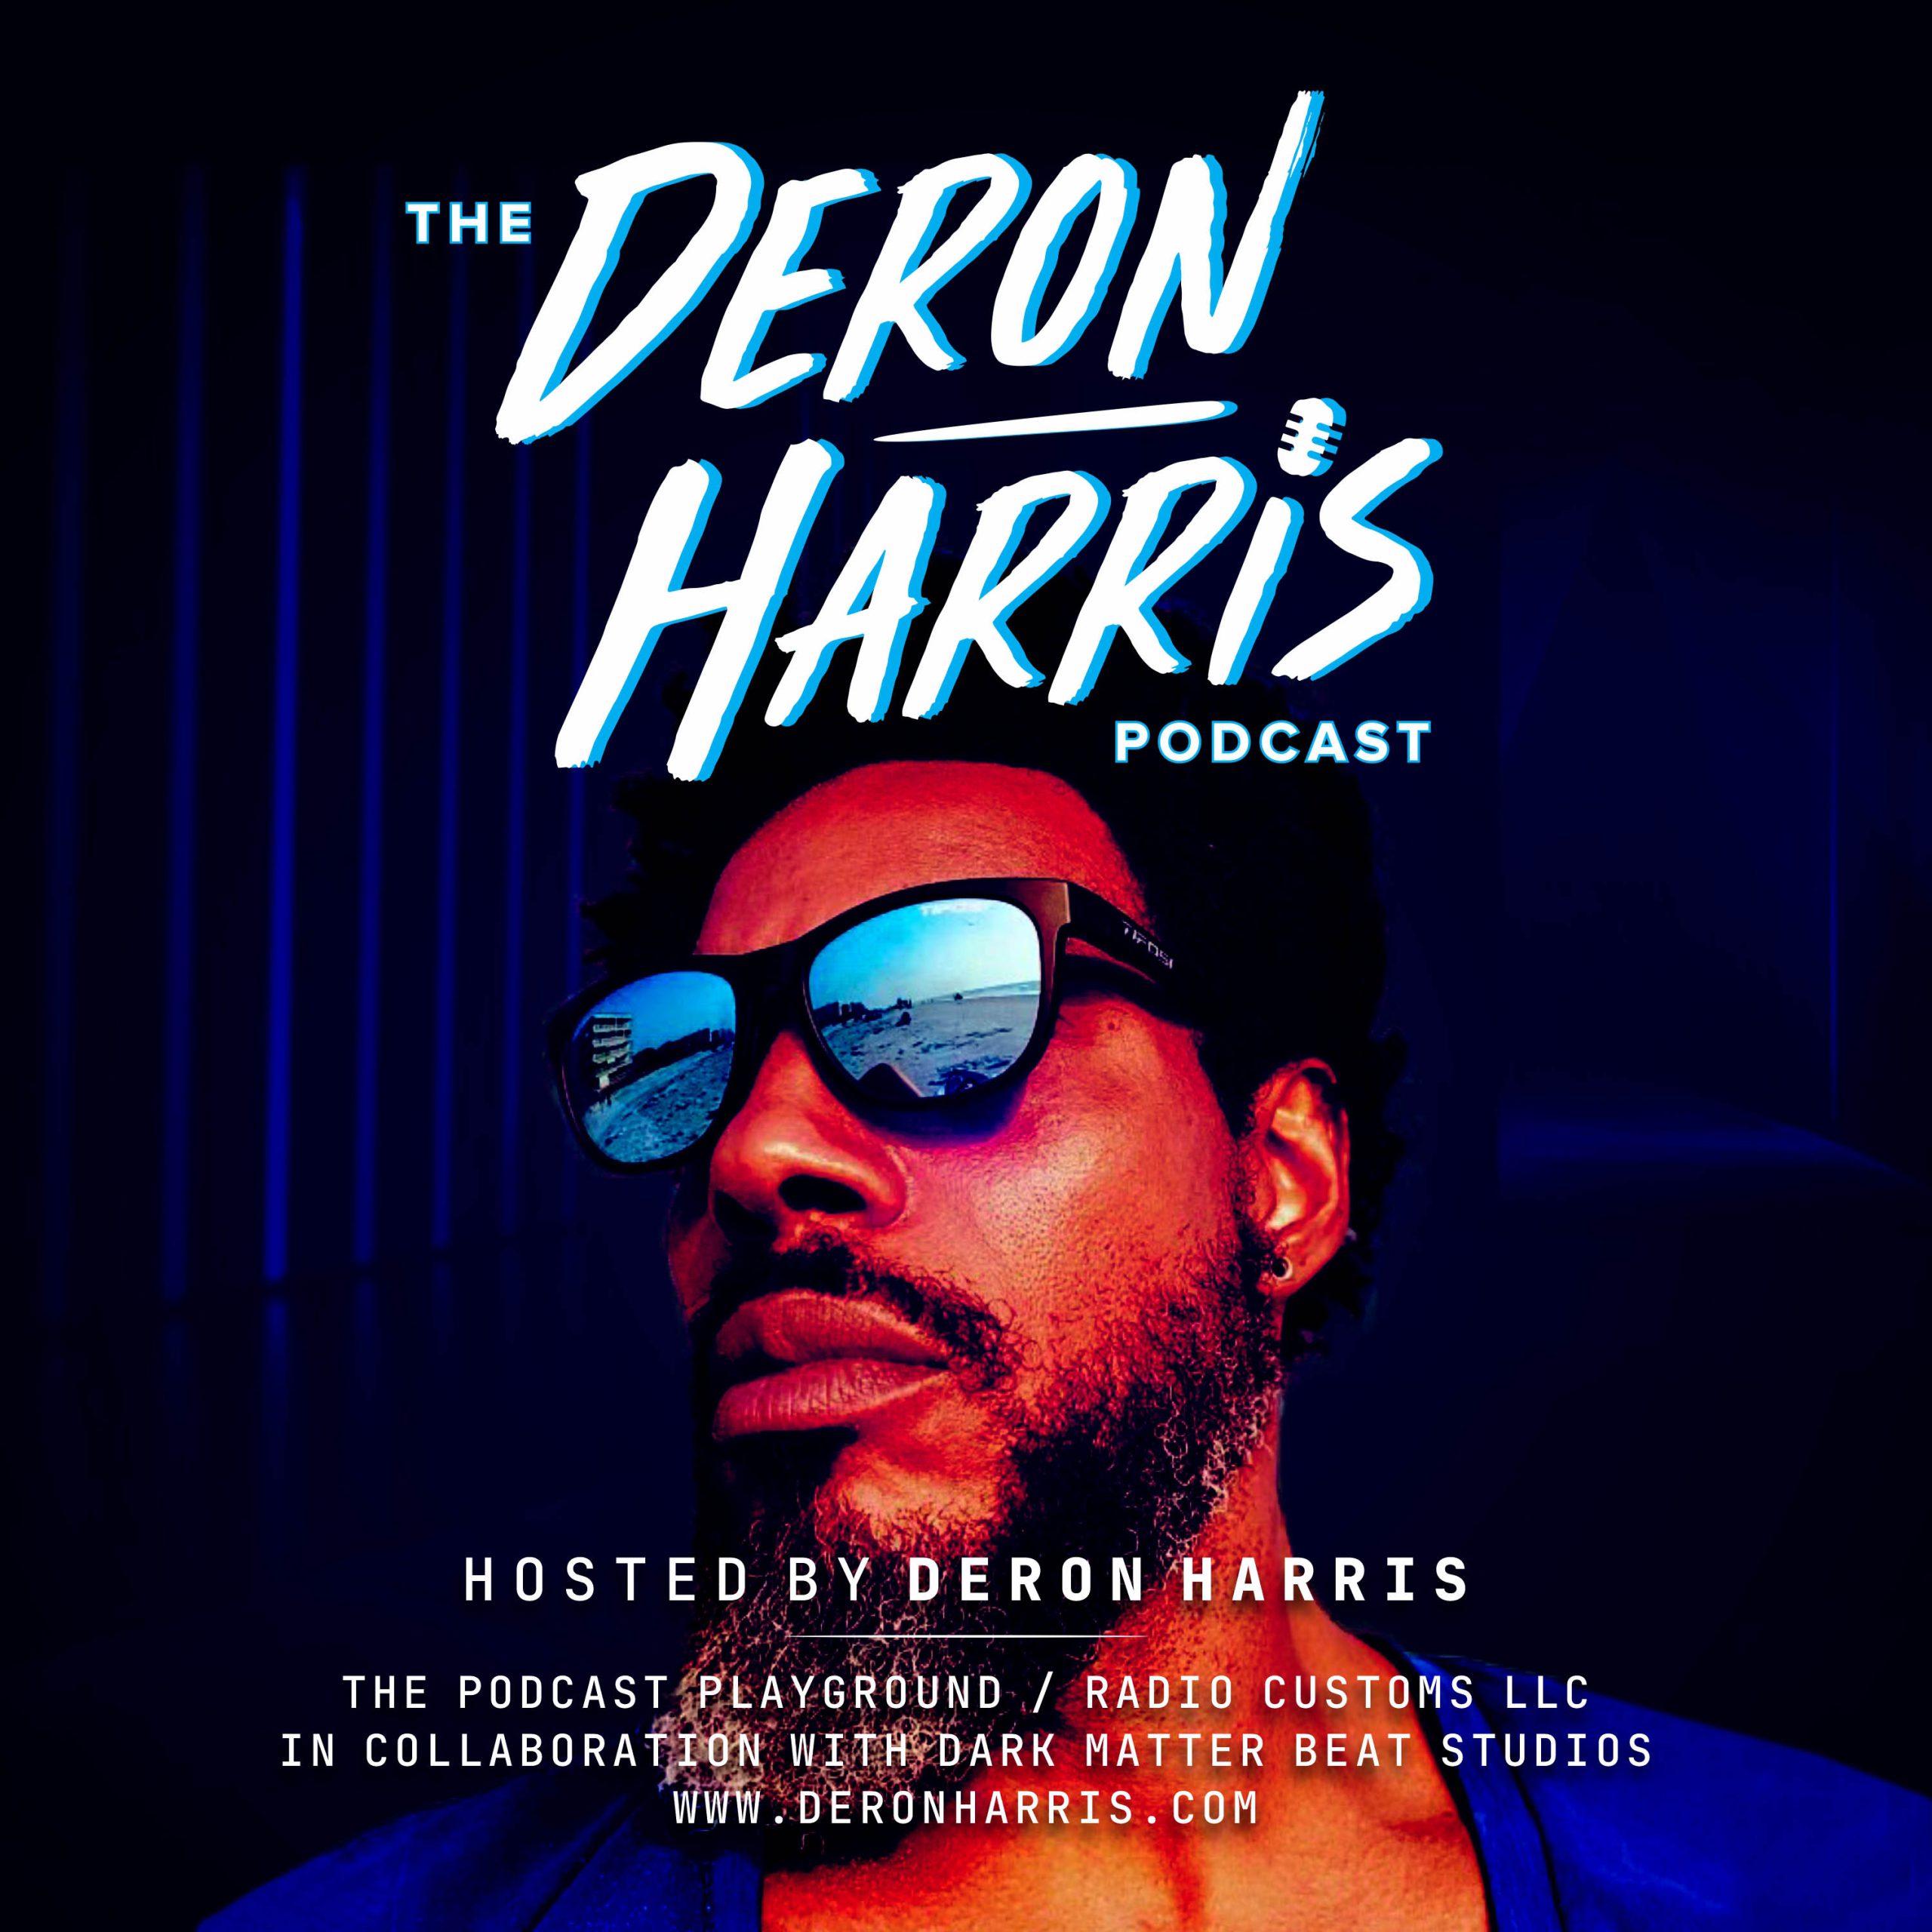 The Deron Harris Podcast